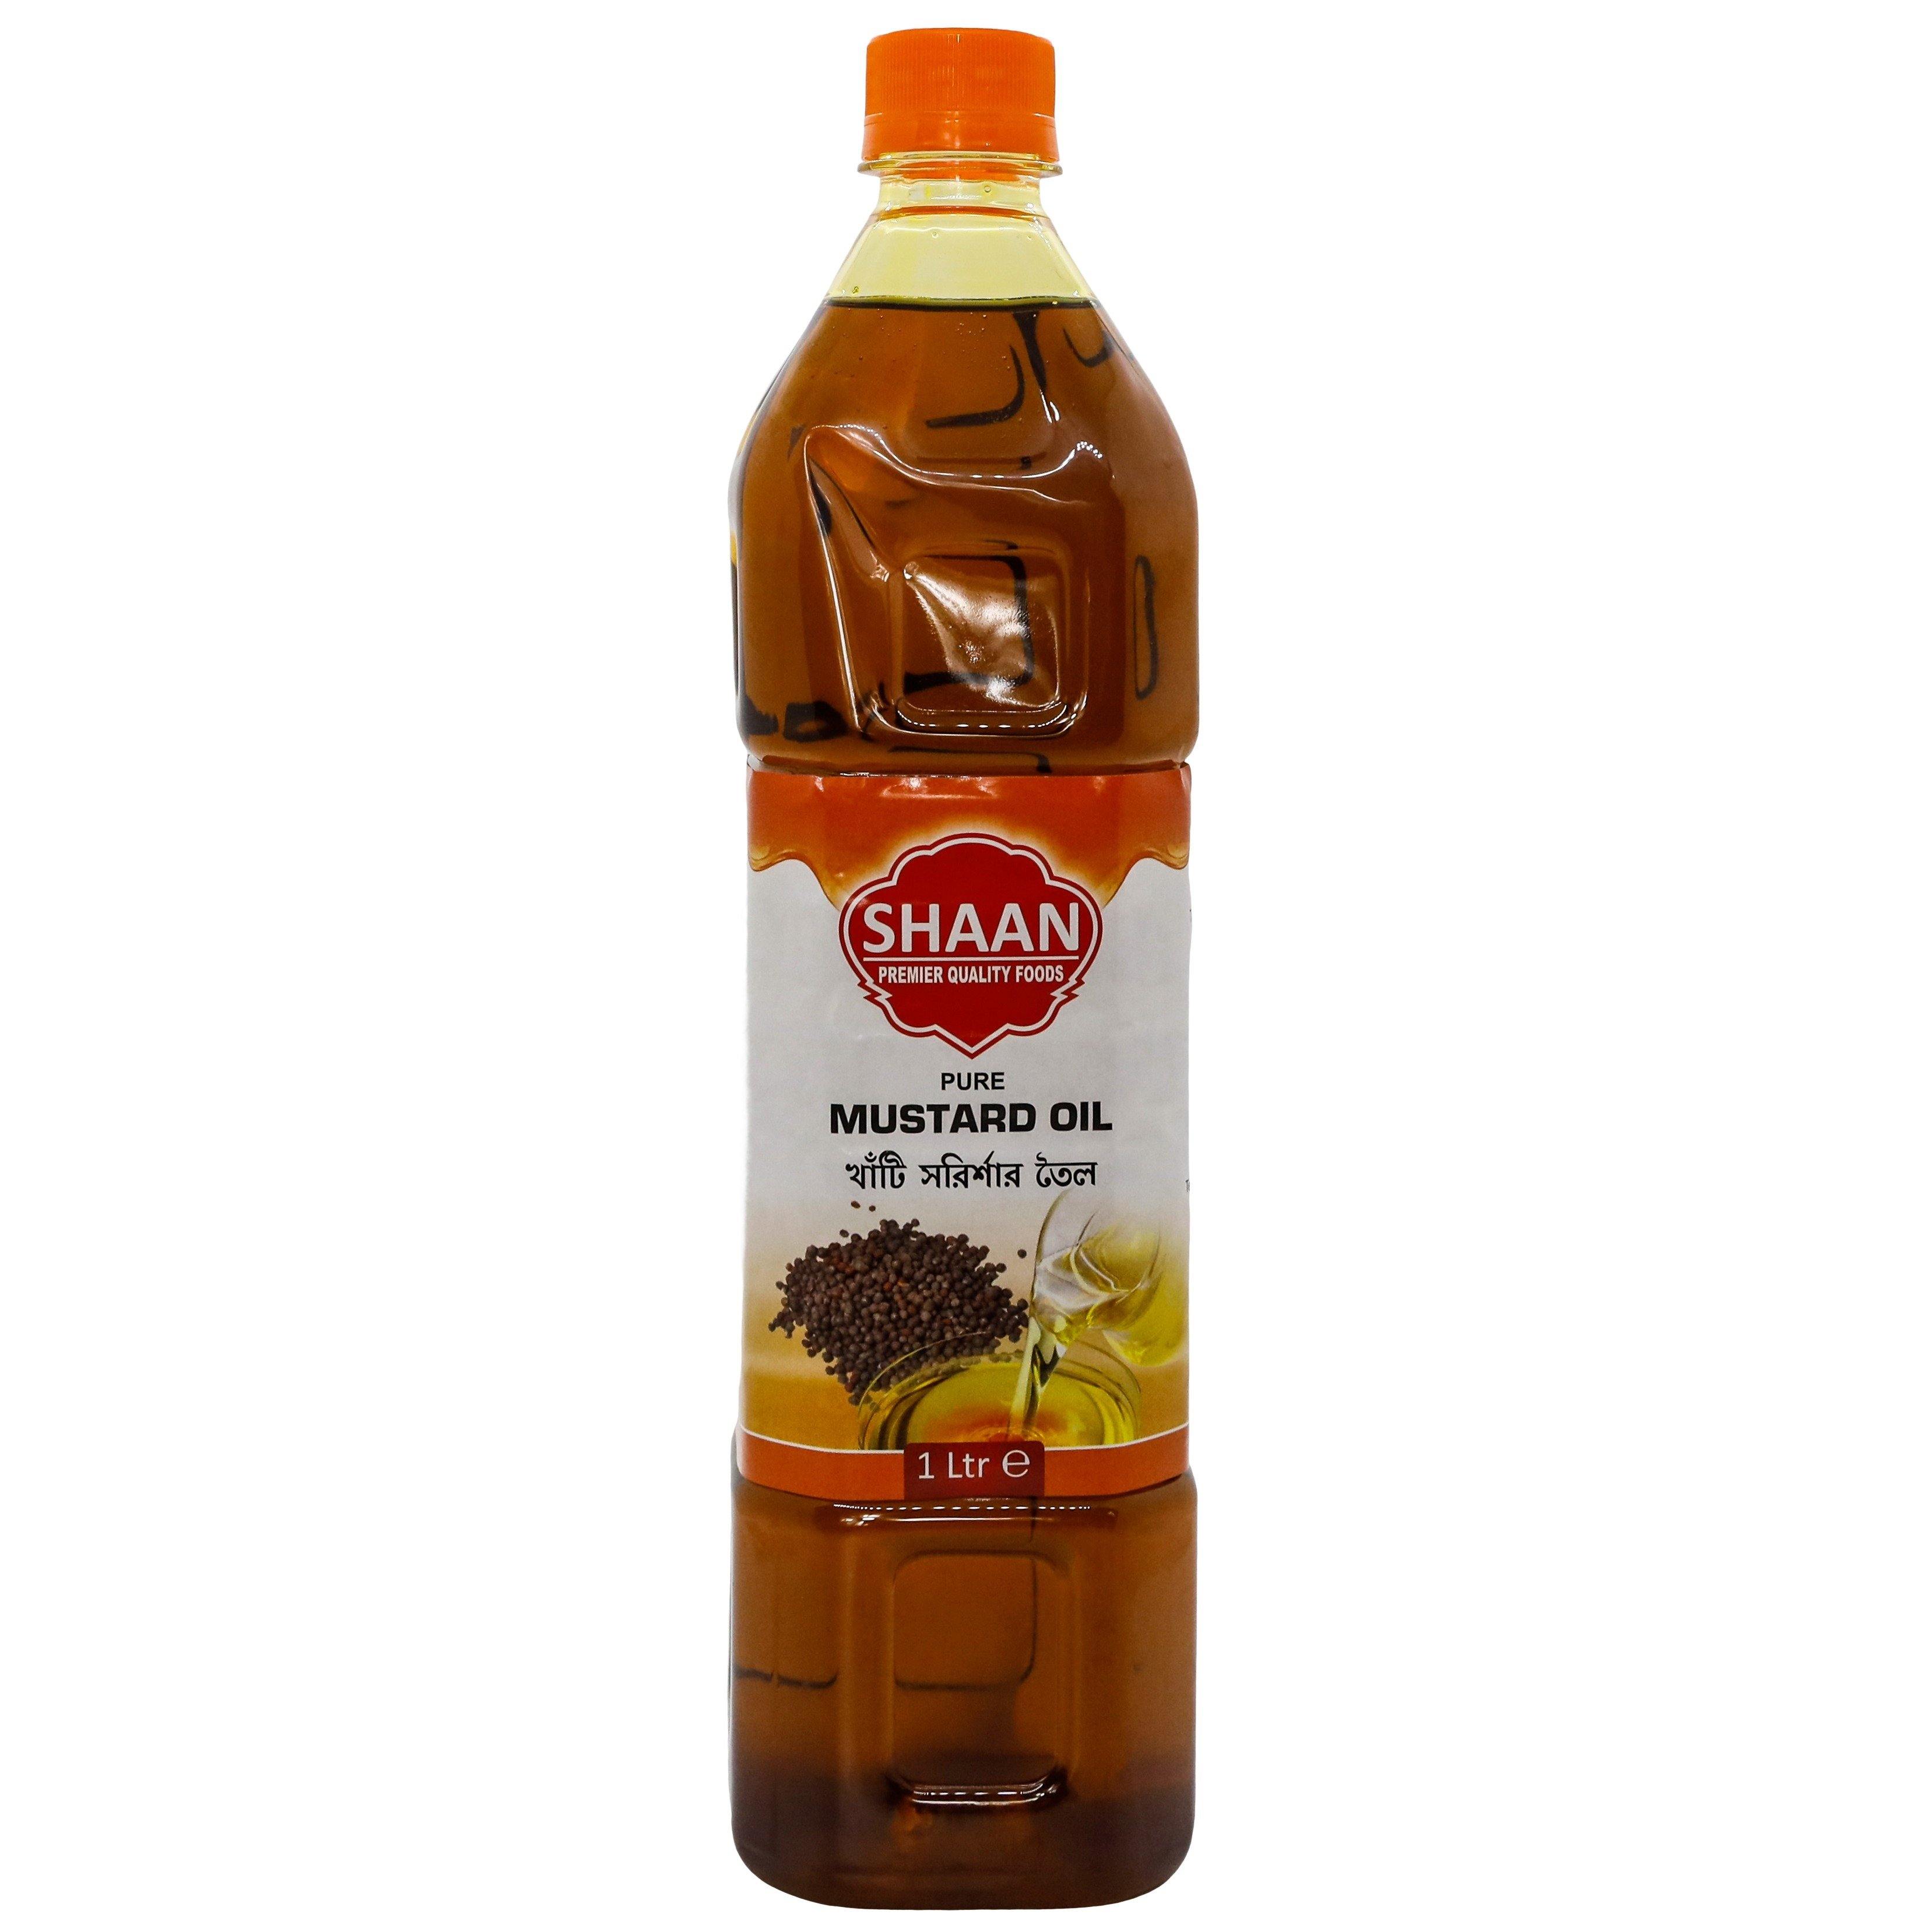 Shaan Mustard Oil 1L @ SaveCo Online Ltd